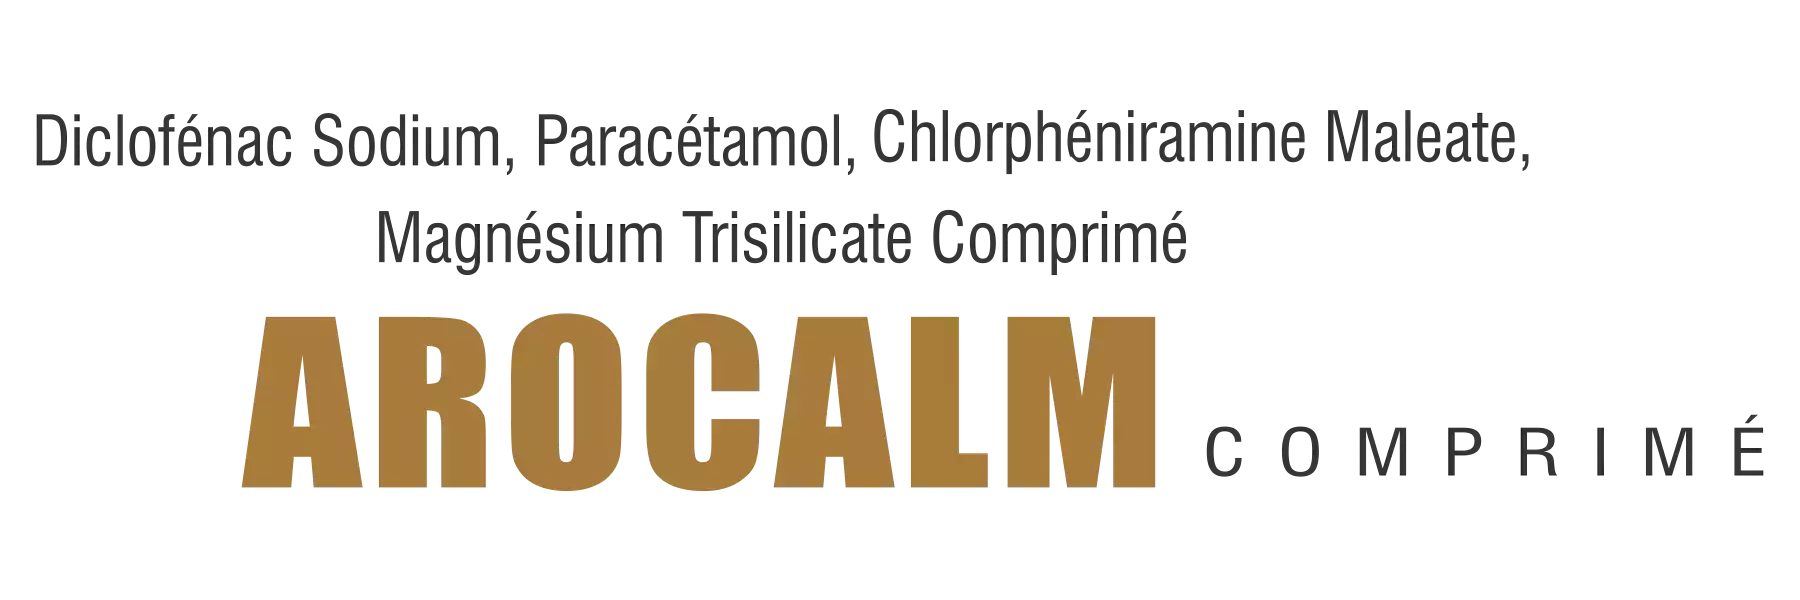 Arocalm